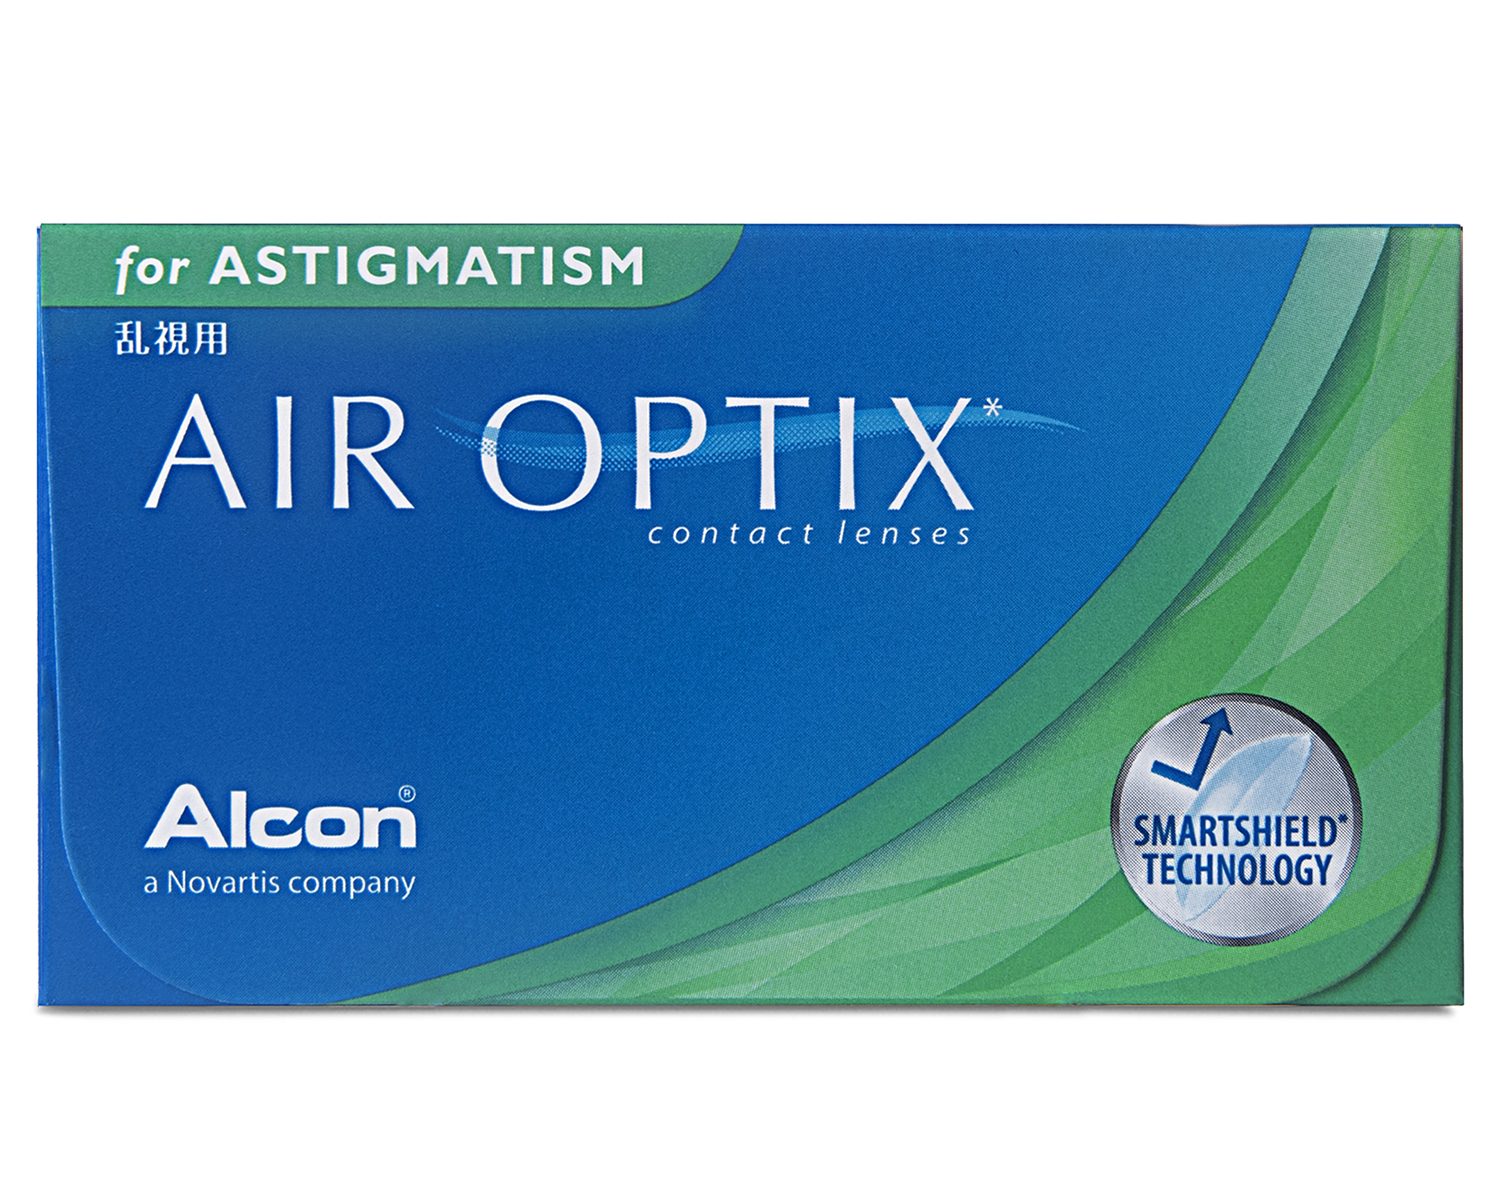 Air Optix Aqua f. Astigmatism – 6er Pack